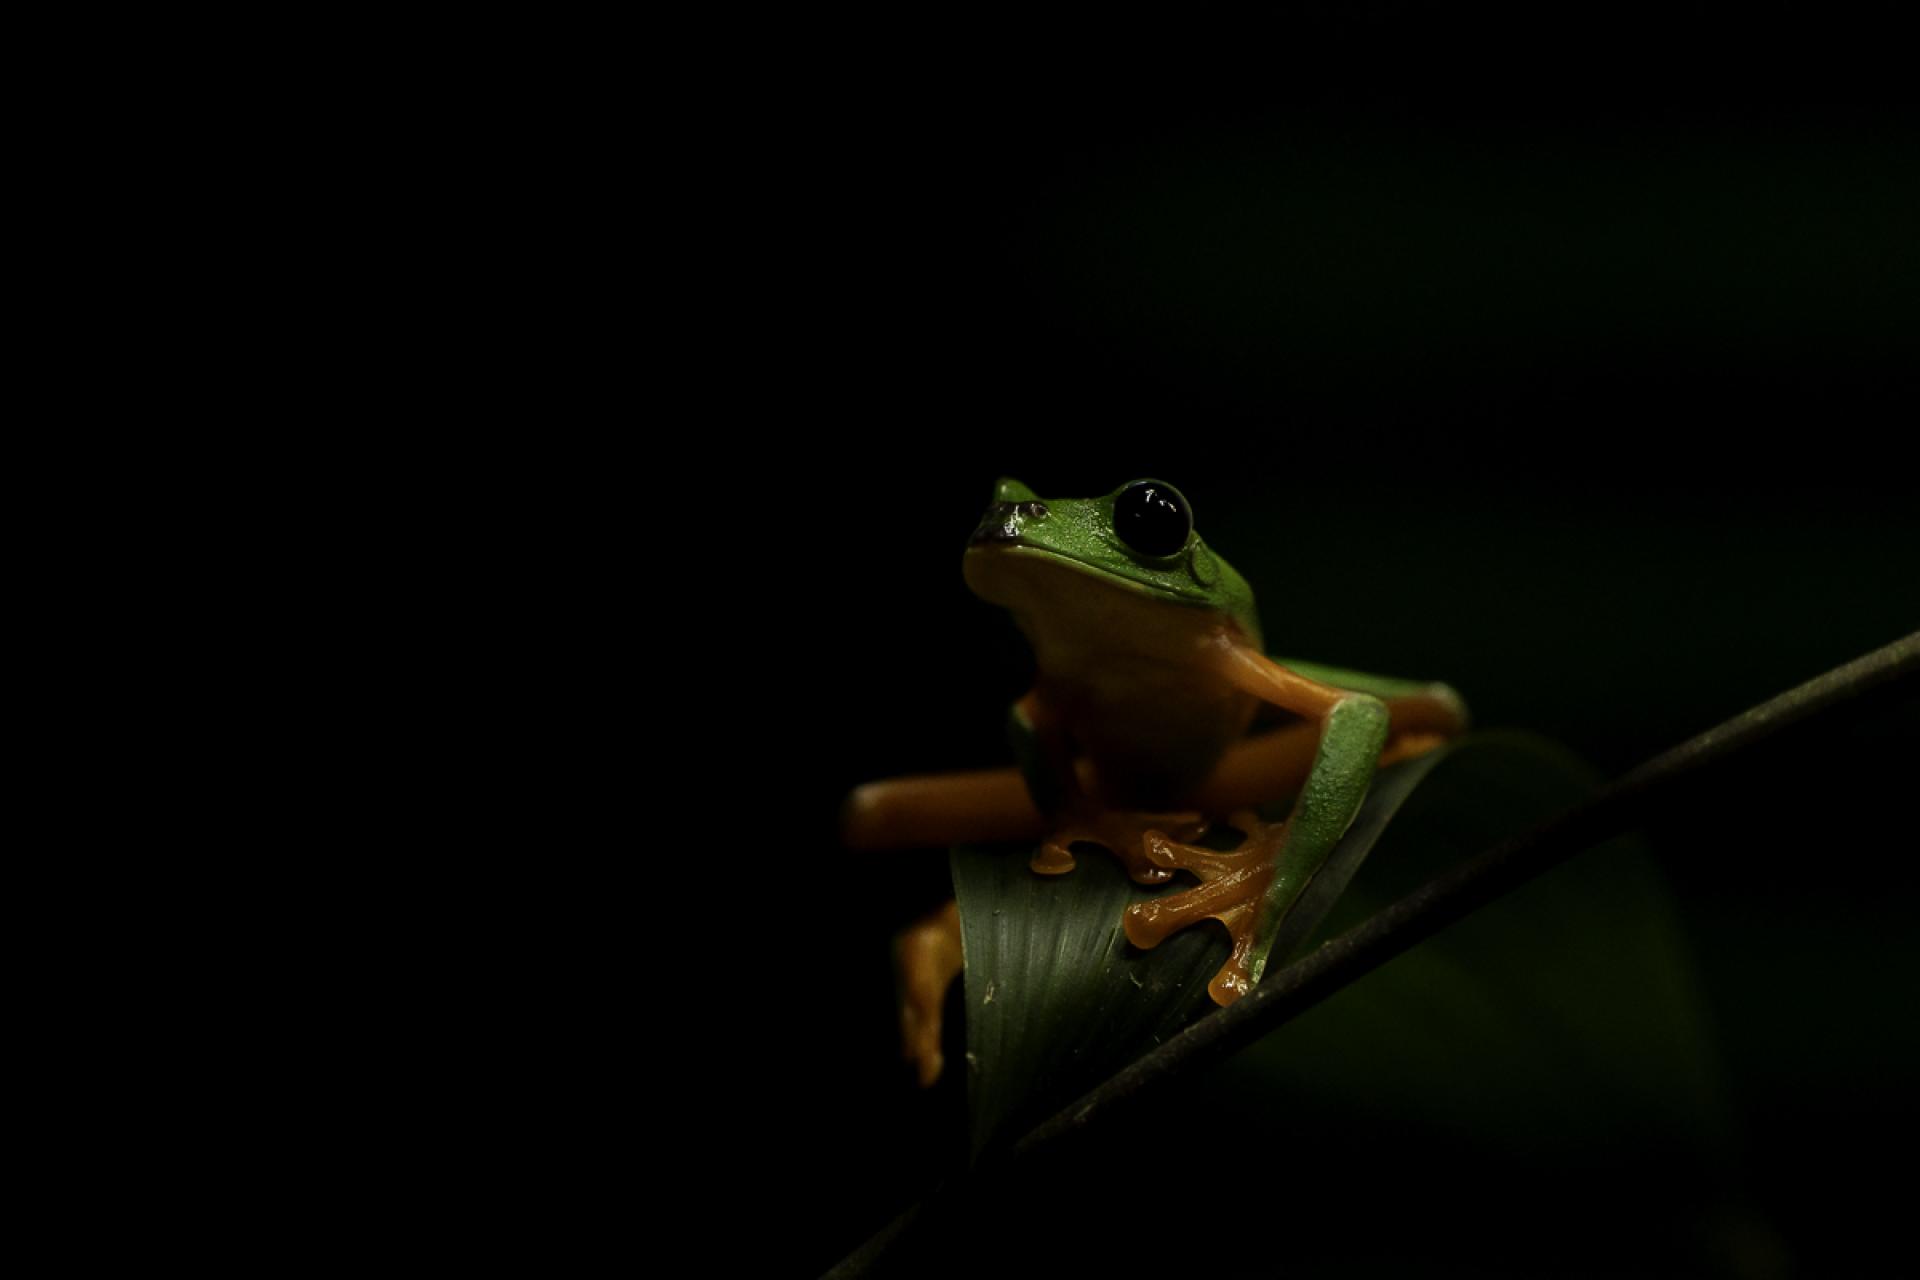 European Photography Awards Winner - Frog beauty